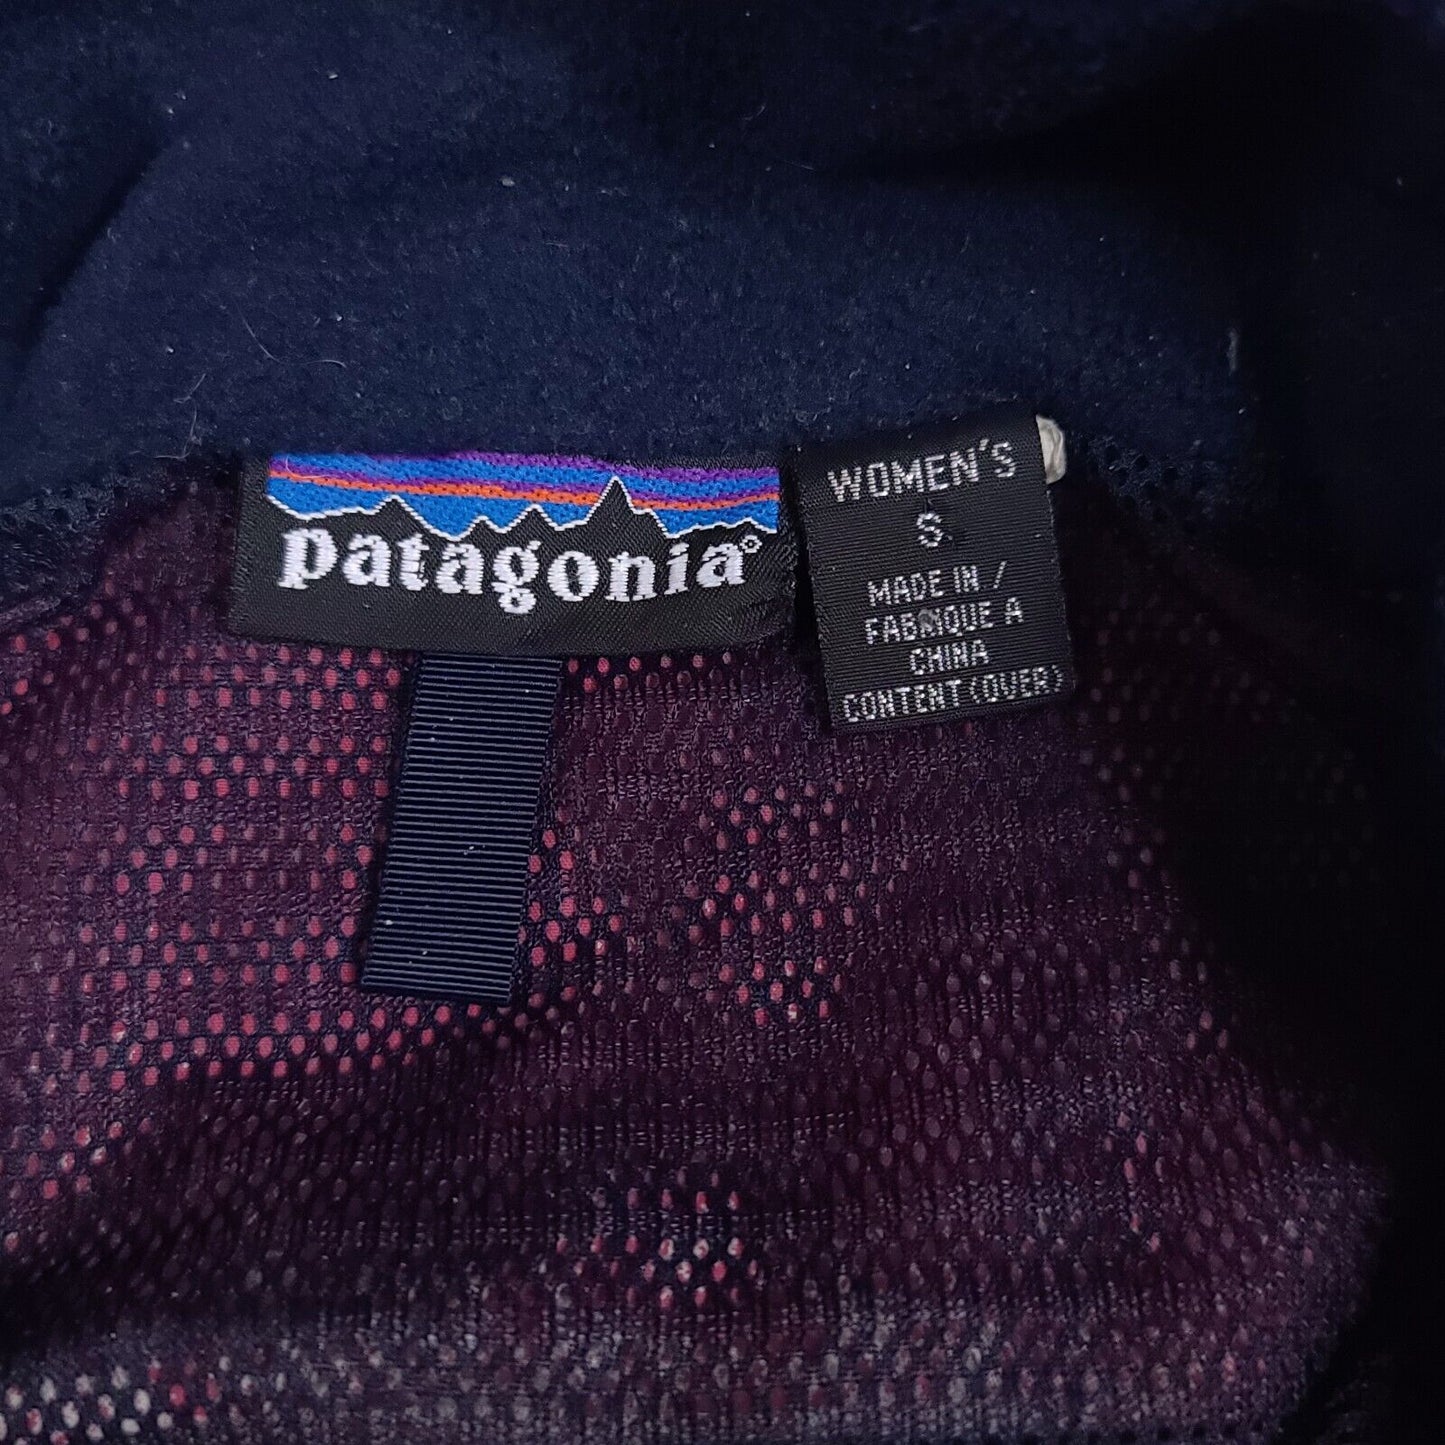 Women's Patagonia Maroon Windbreaker Jacket